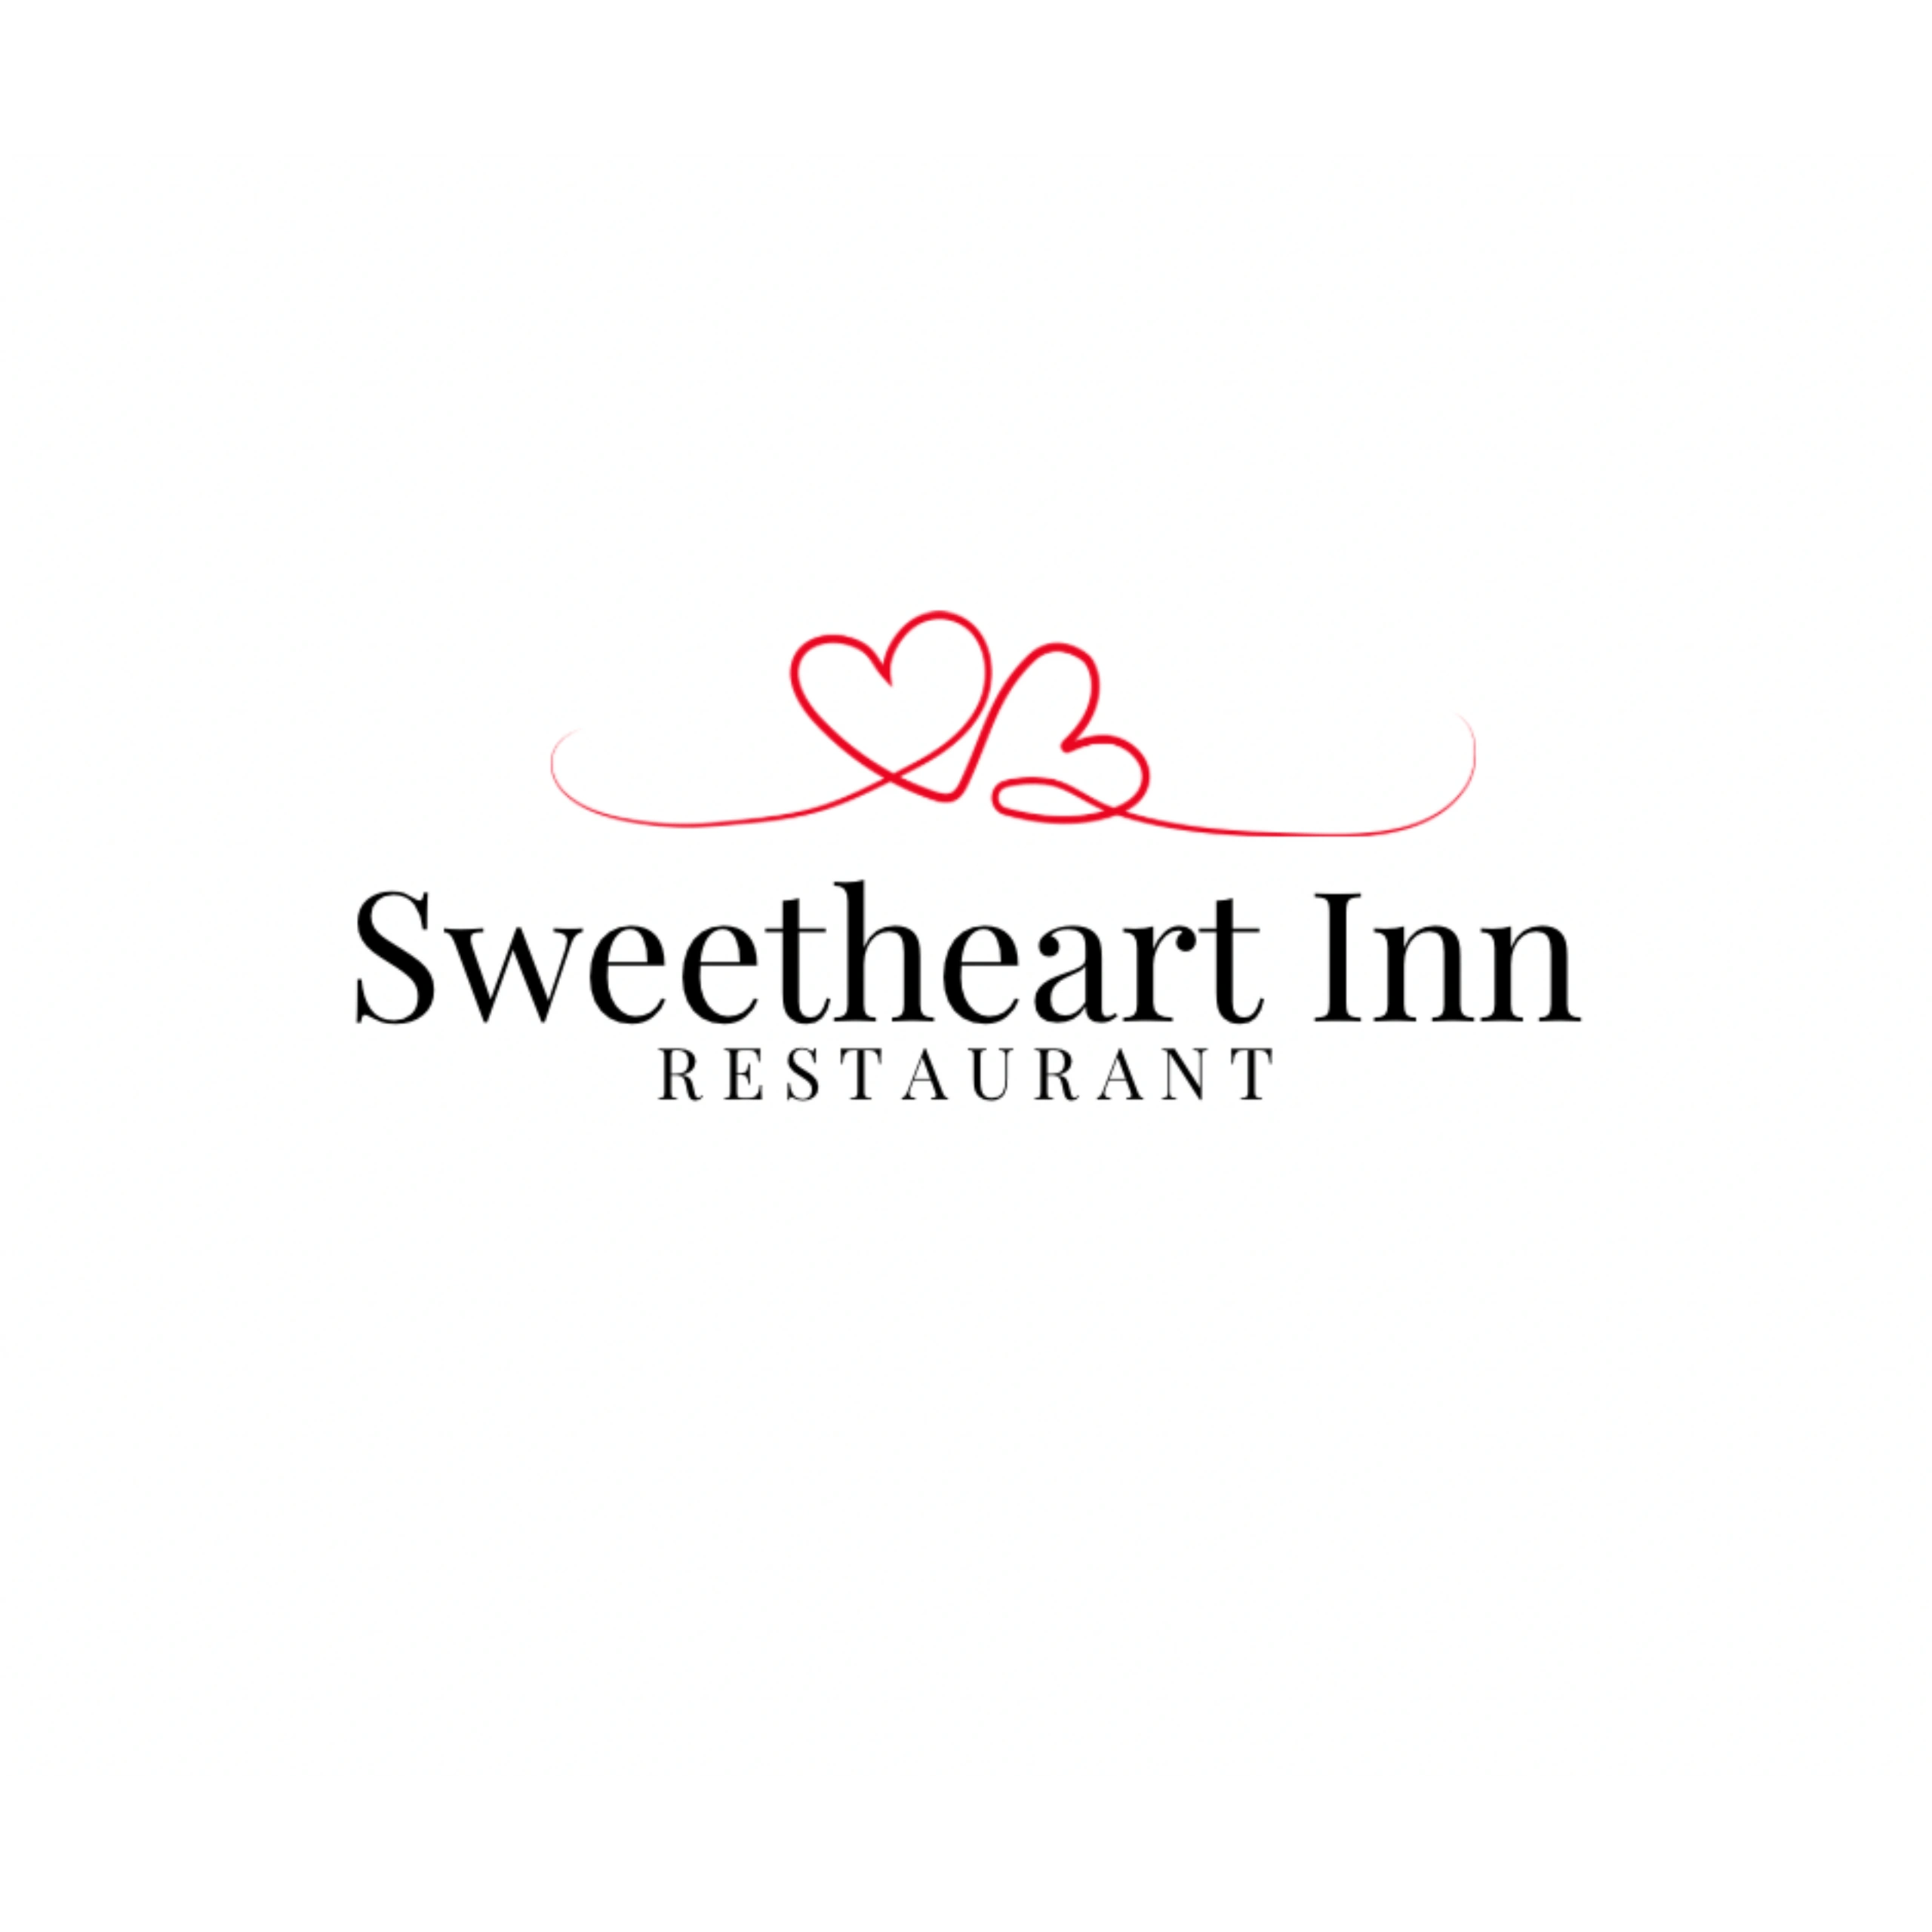 The Sweetheart Inn